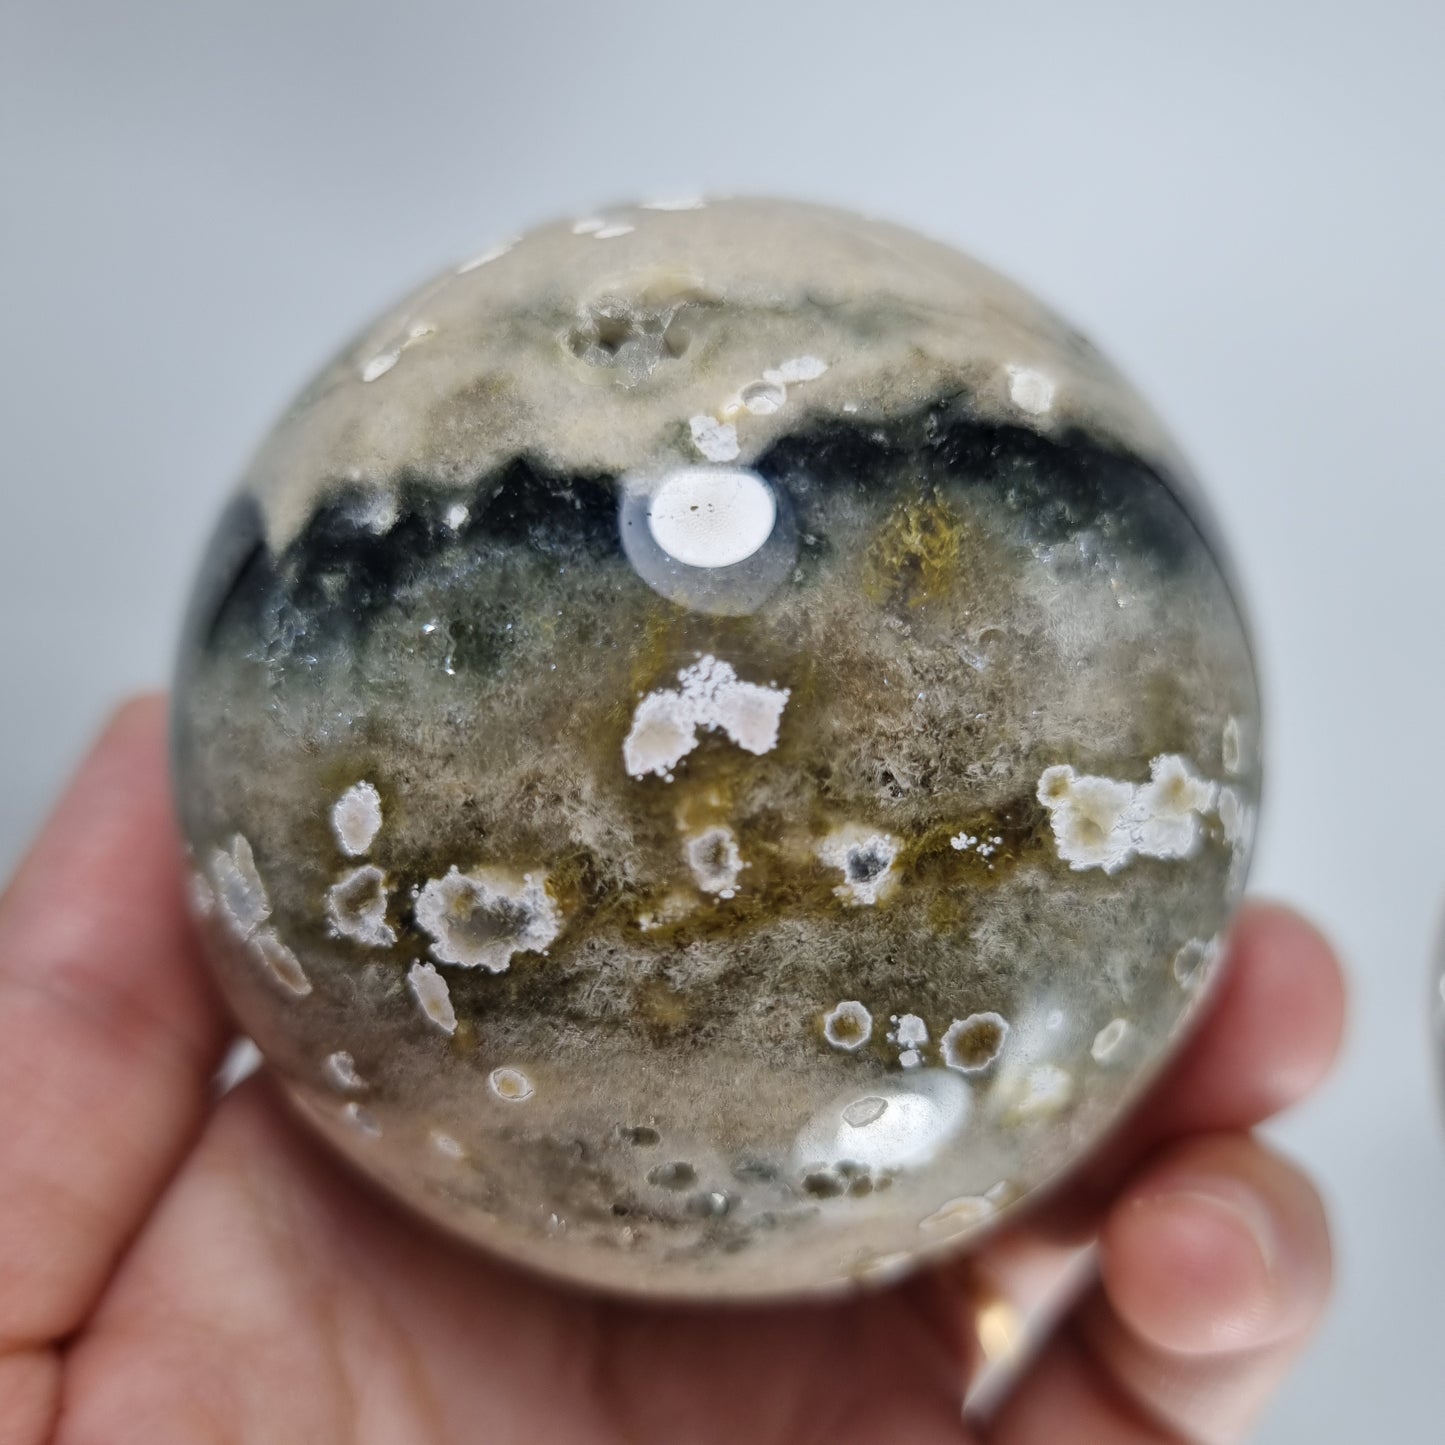 Ocean Jasper Crystal Polished Sphere with druzy vug (OJ2) 67mm diameter